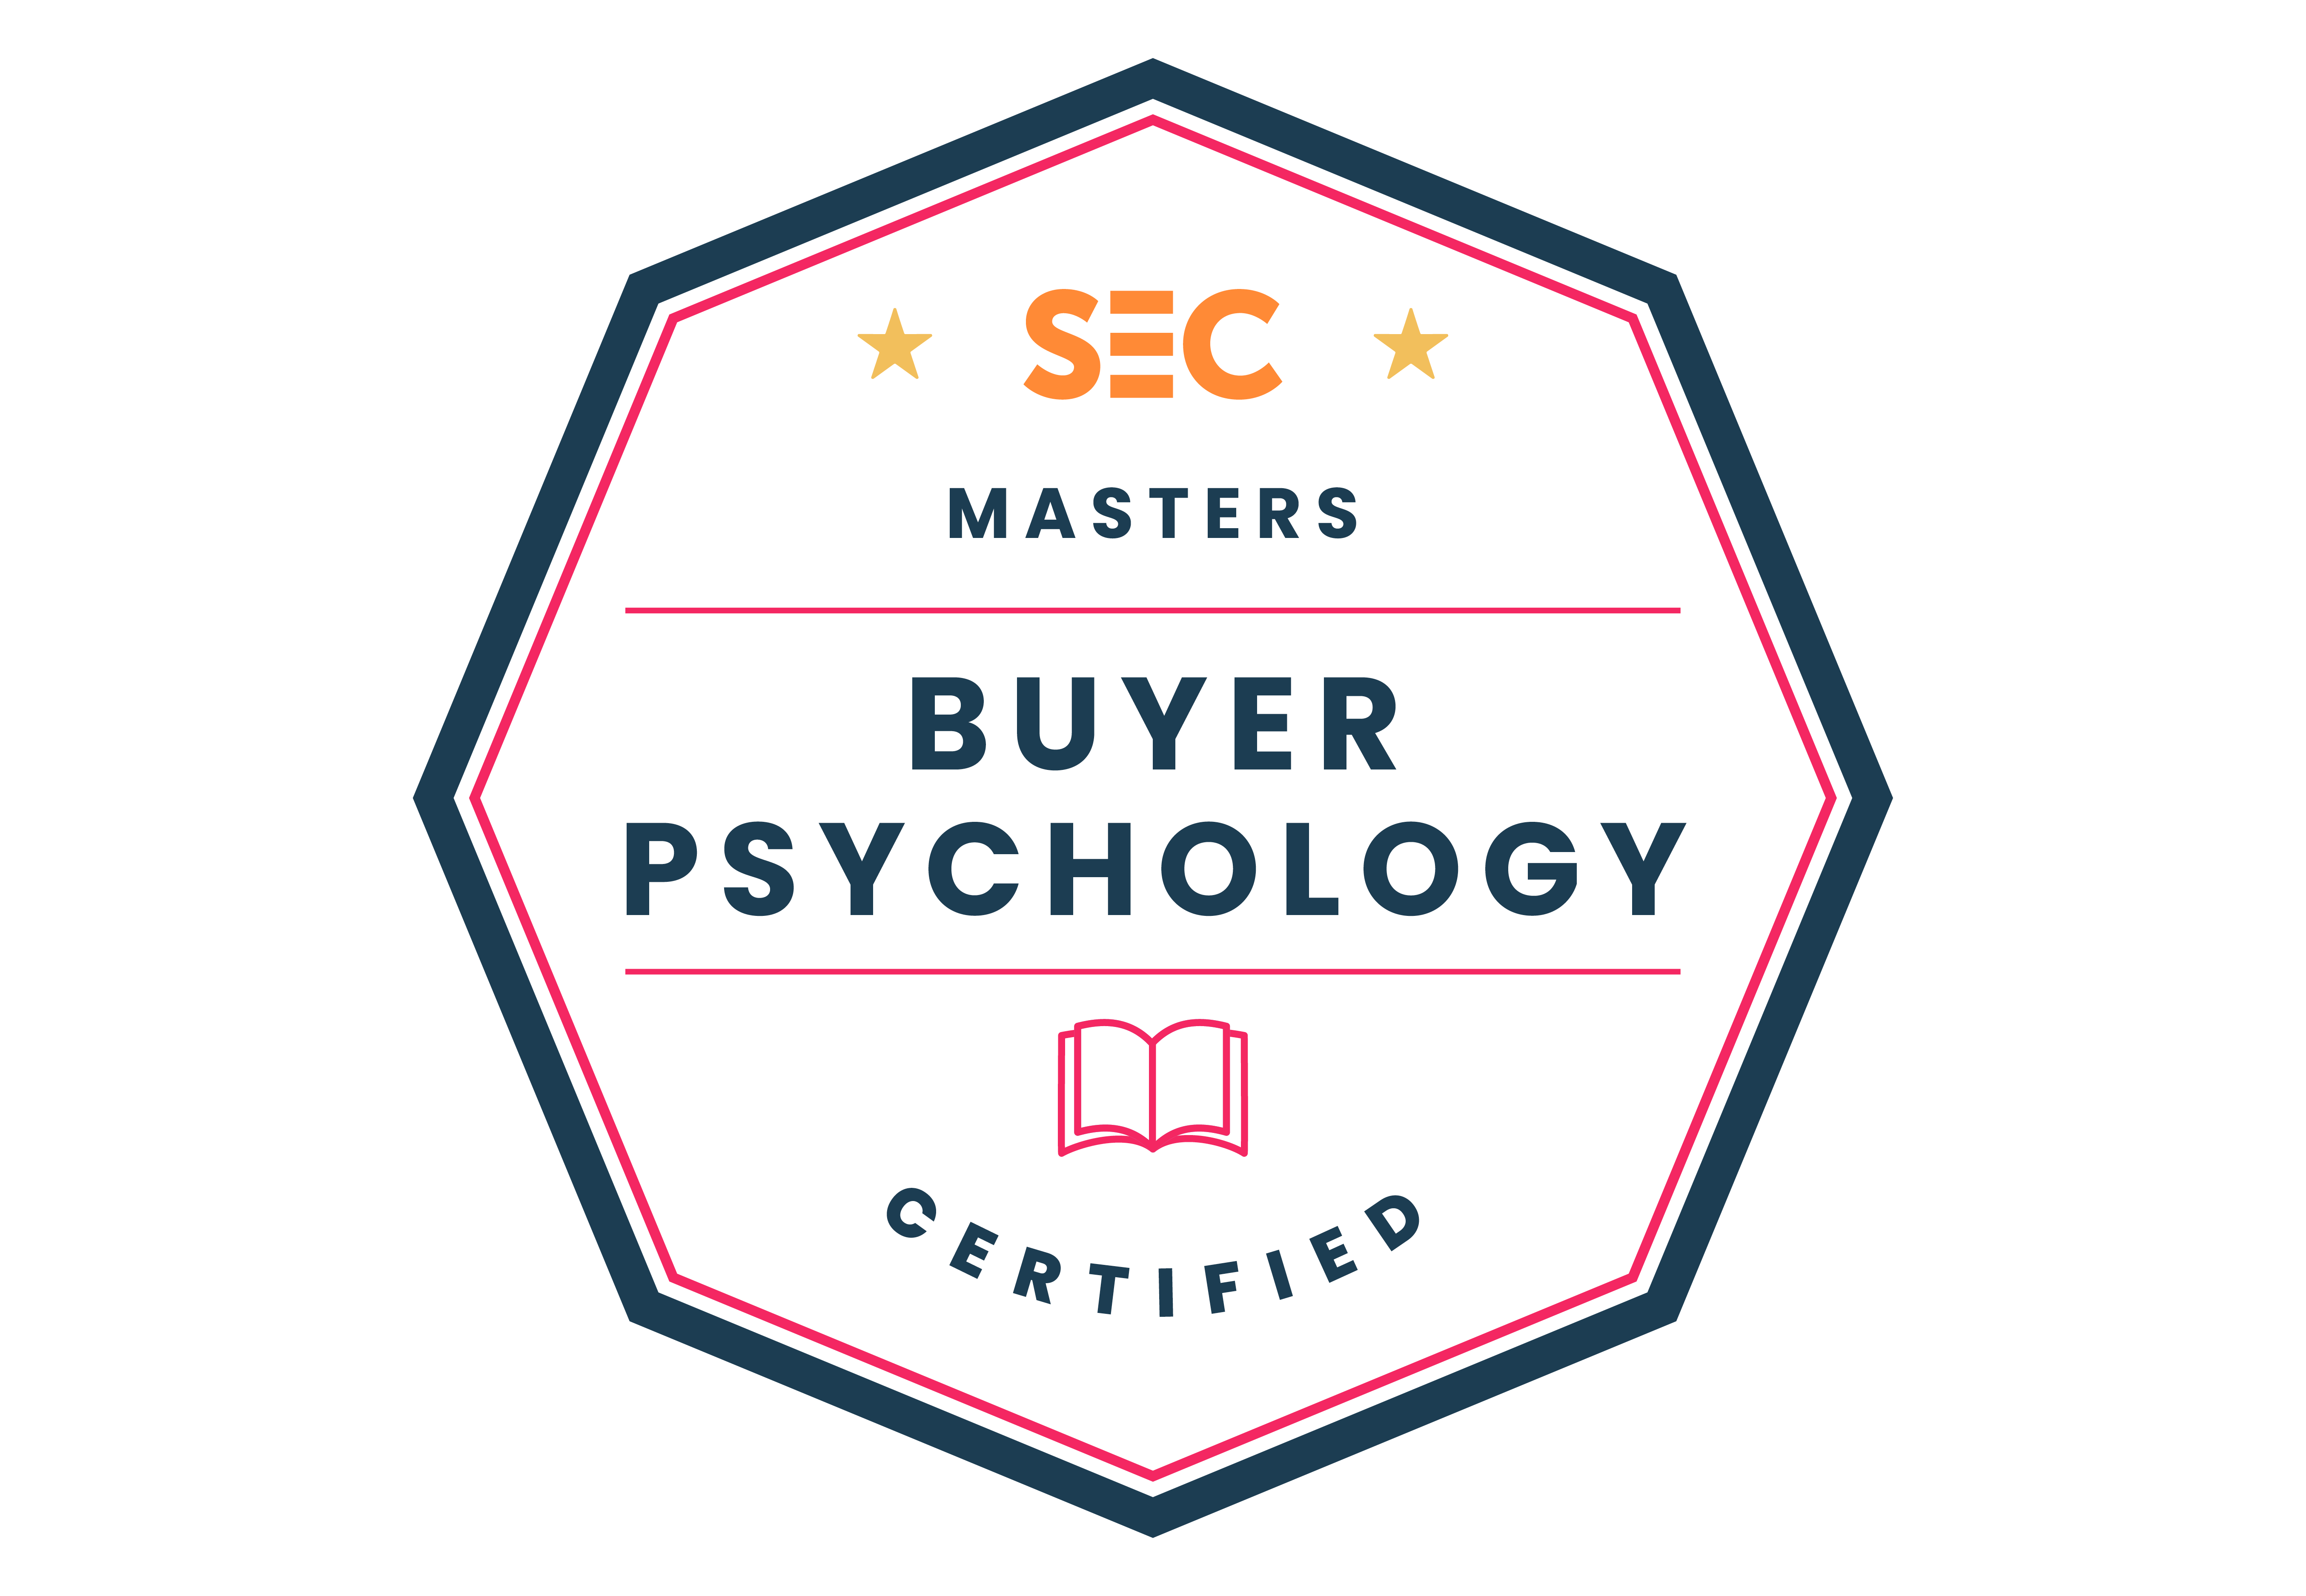 Buyer Psychology Masters badge